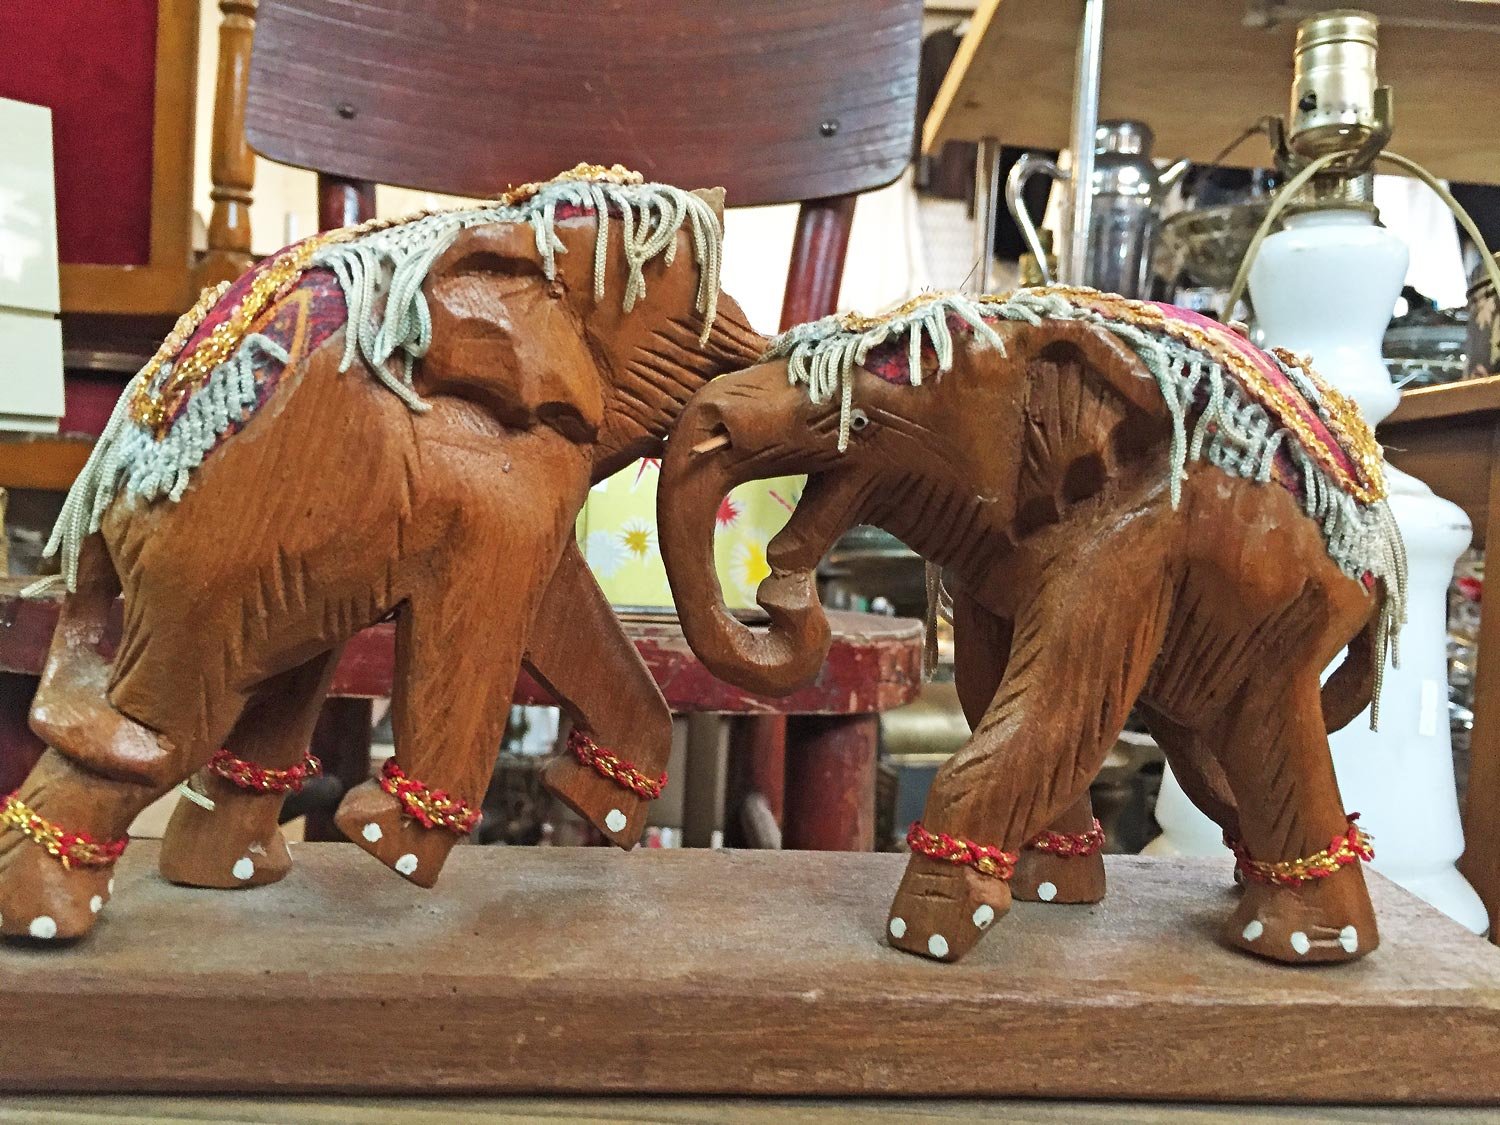 Whole-widen-world-new-york-thrift-store-elephants.jpg